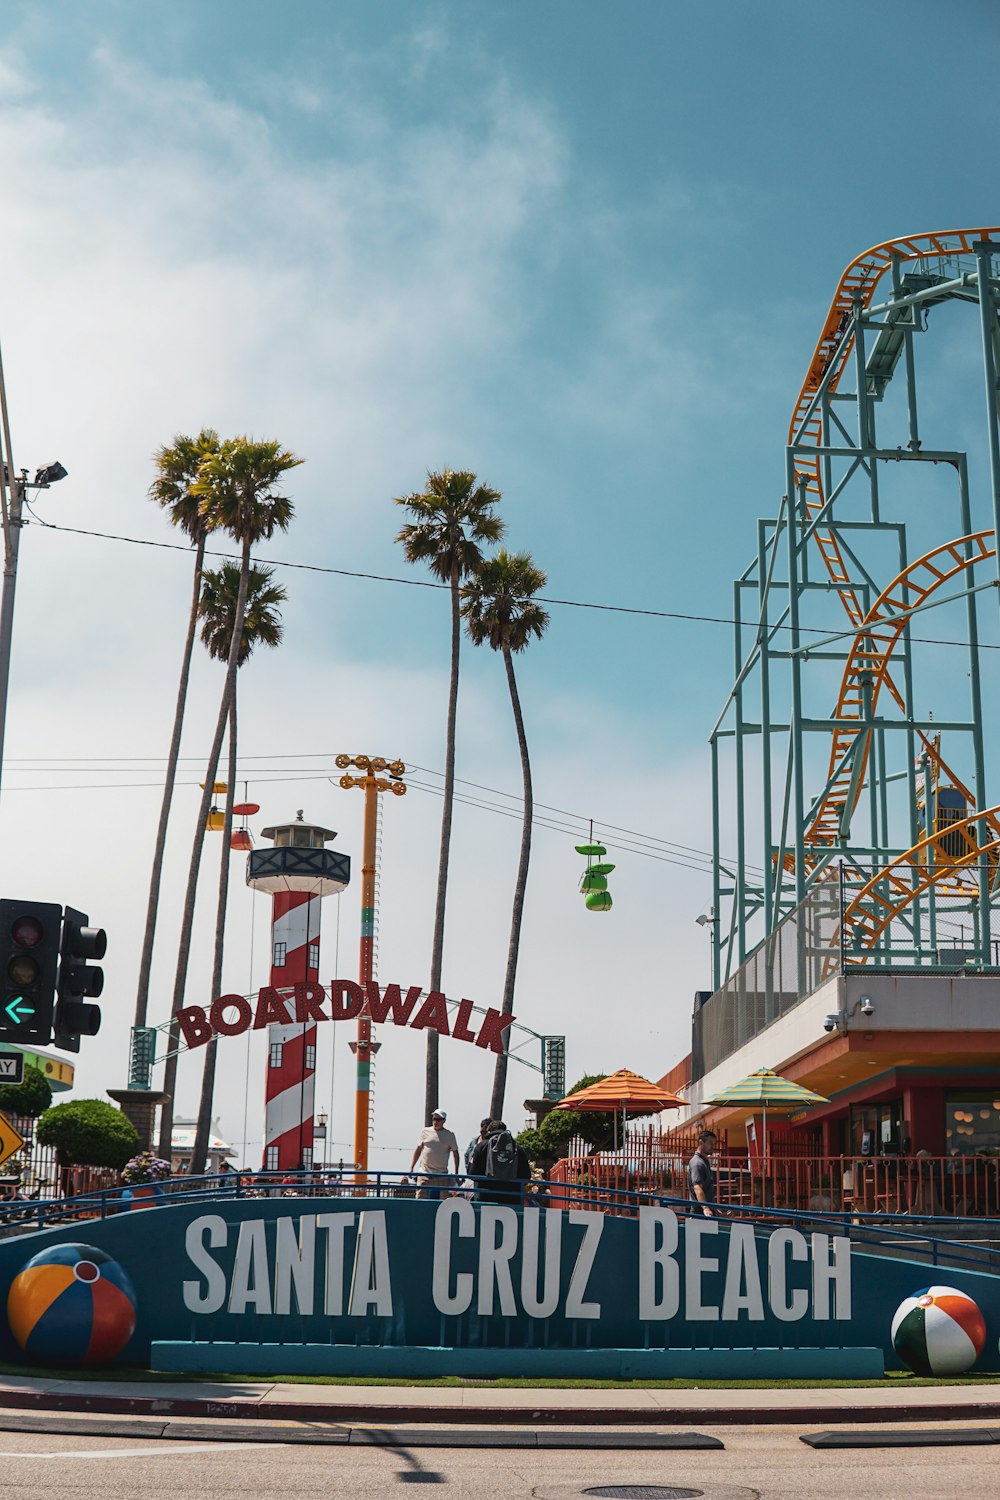 the santa cruz beach roller coaster is on display